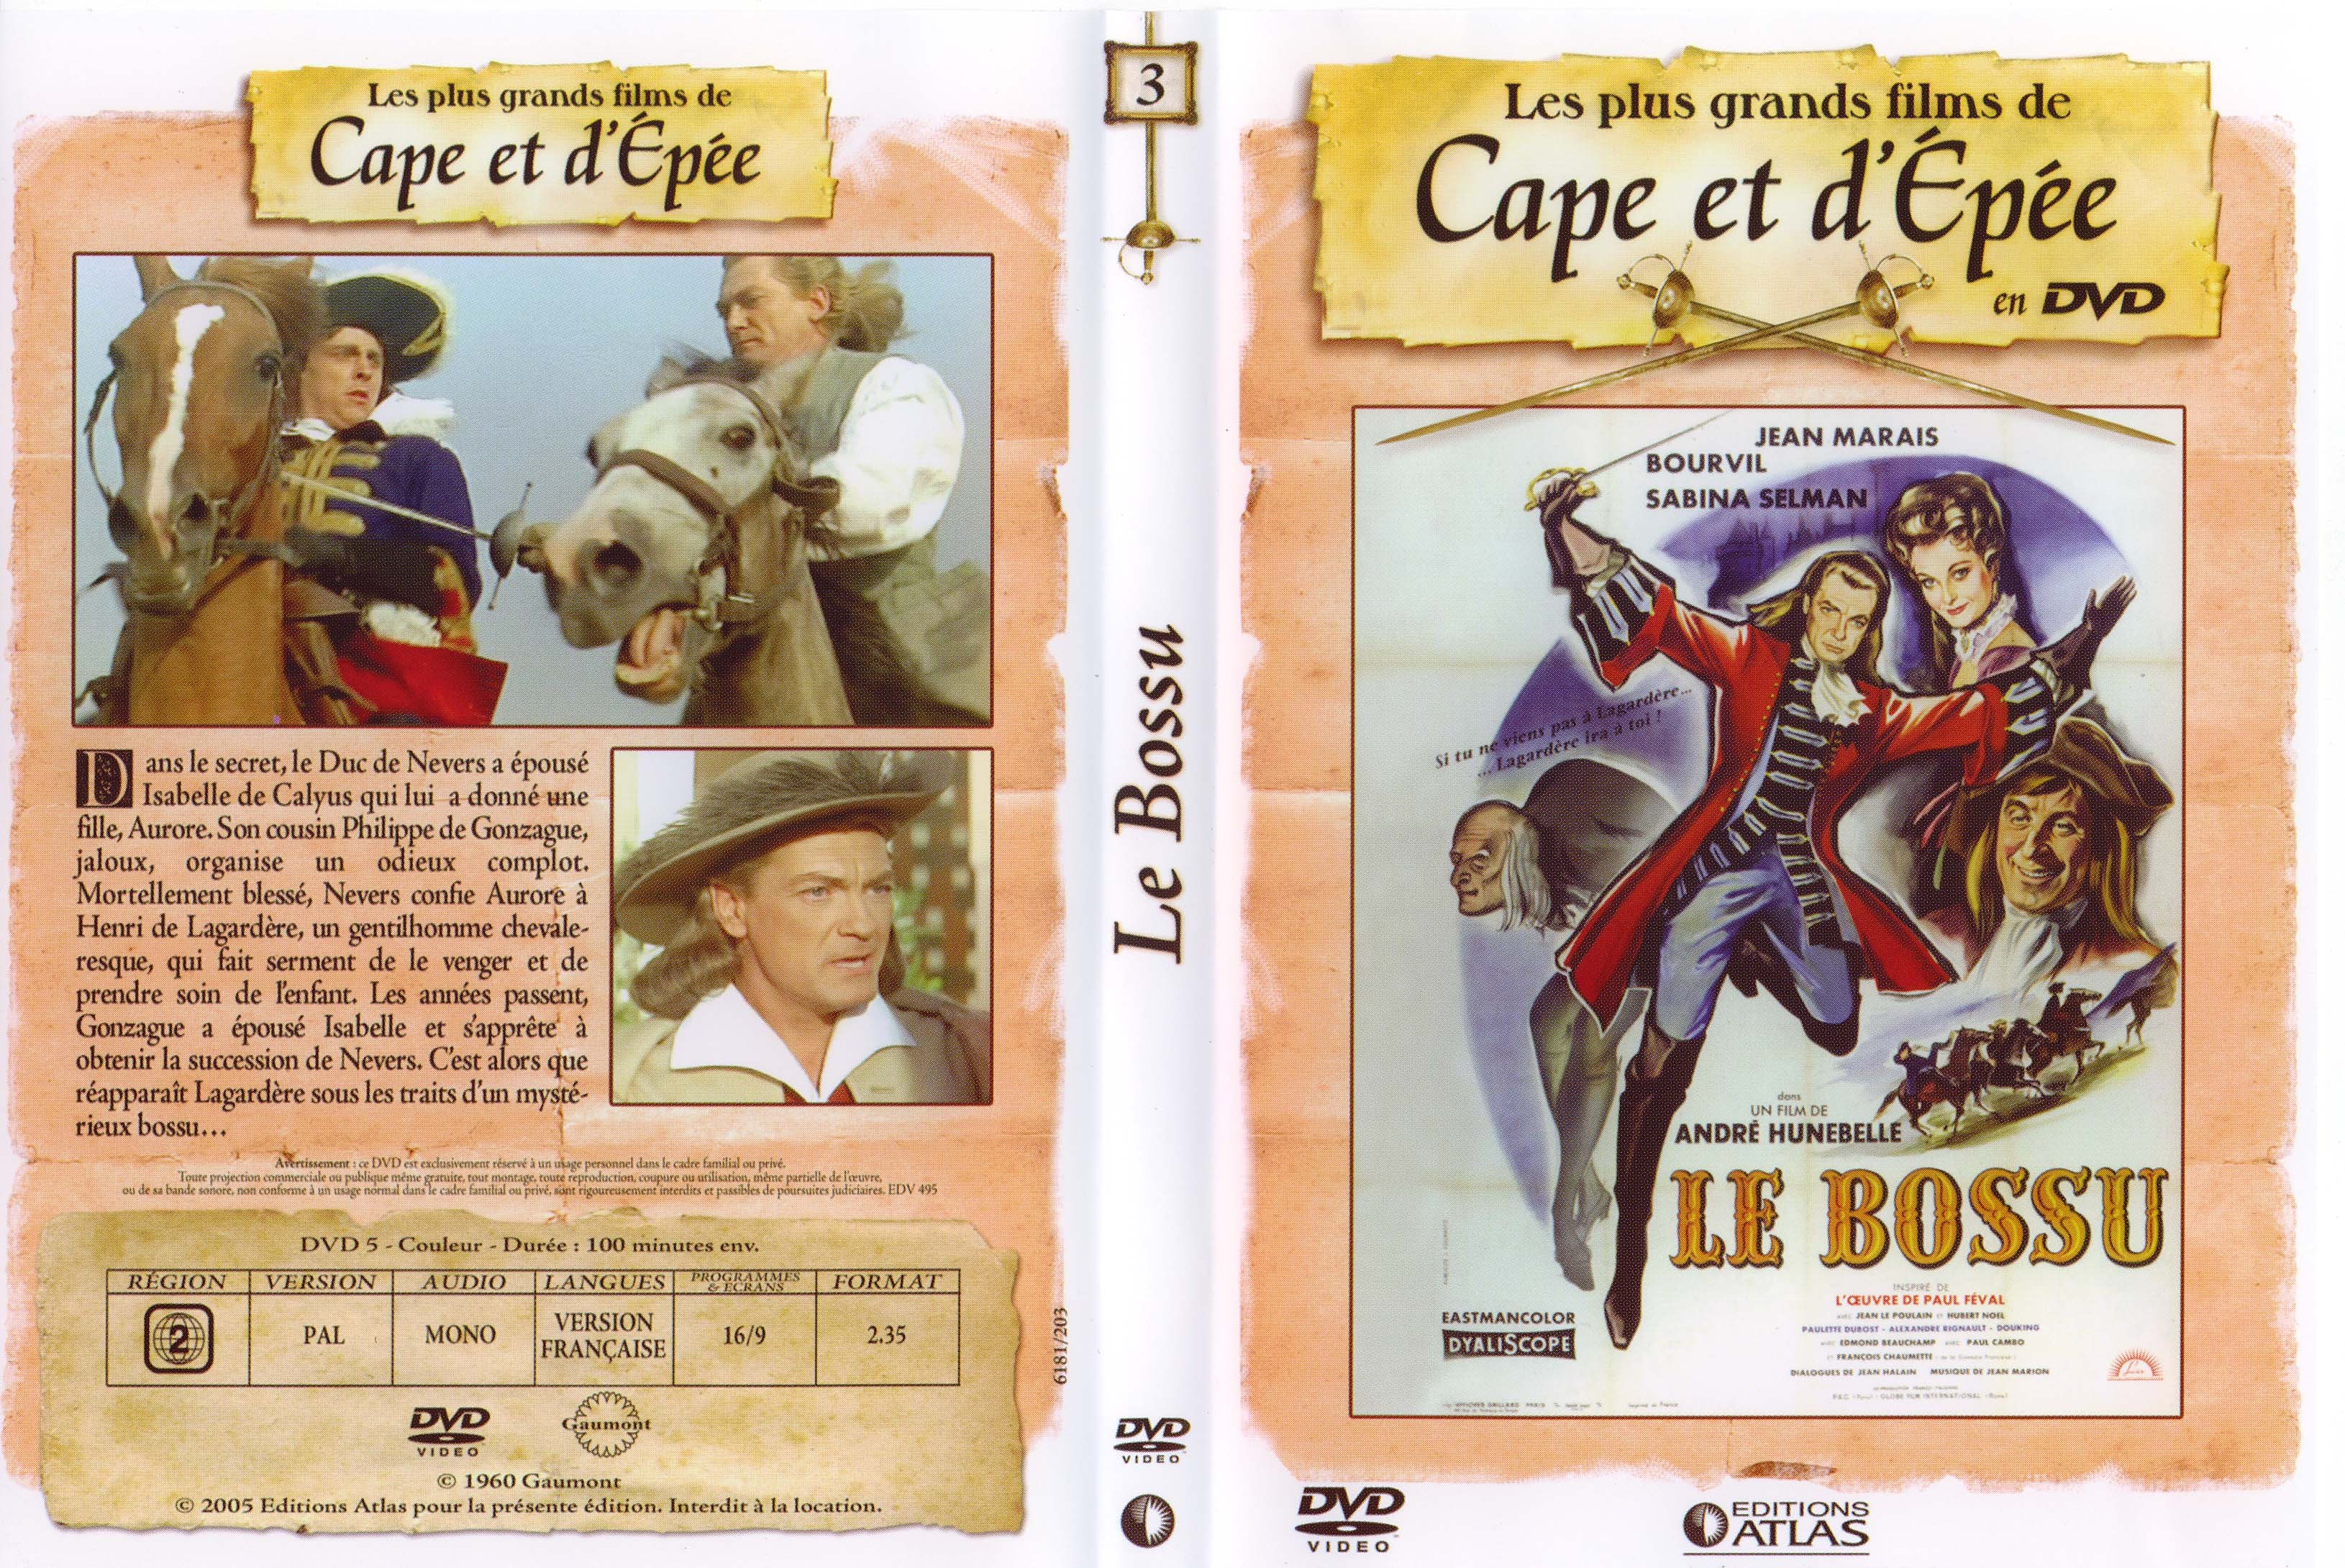 Jaquette DVD Le bossu (Jean Marais)